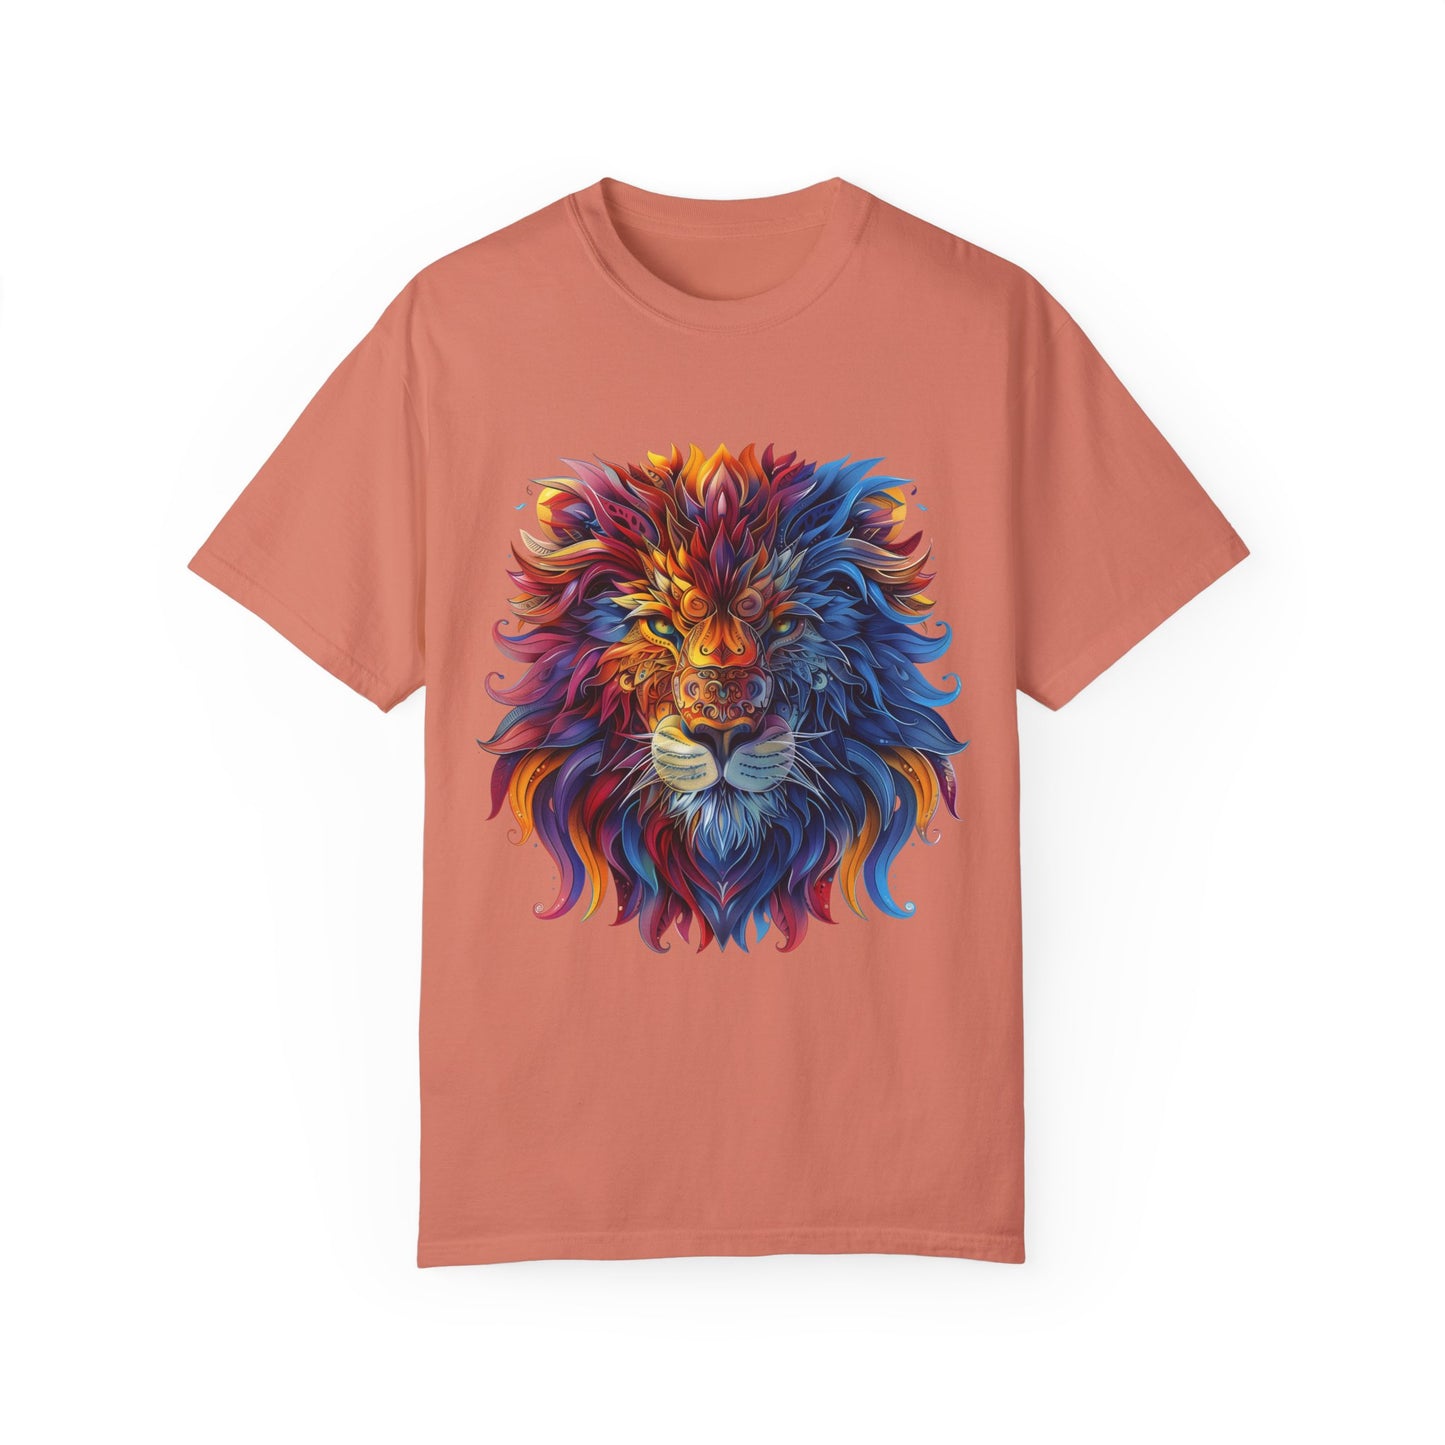 Lion Head Cool Graphic Design Novelty Unisex Garment-dyed T-shirt Cotton Funny Humorous Graphic Soft Premium Unisex Men Women Terracotta T-shirt Birthday Gift-14